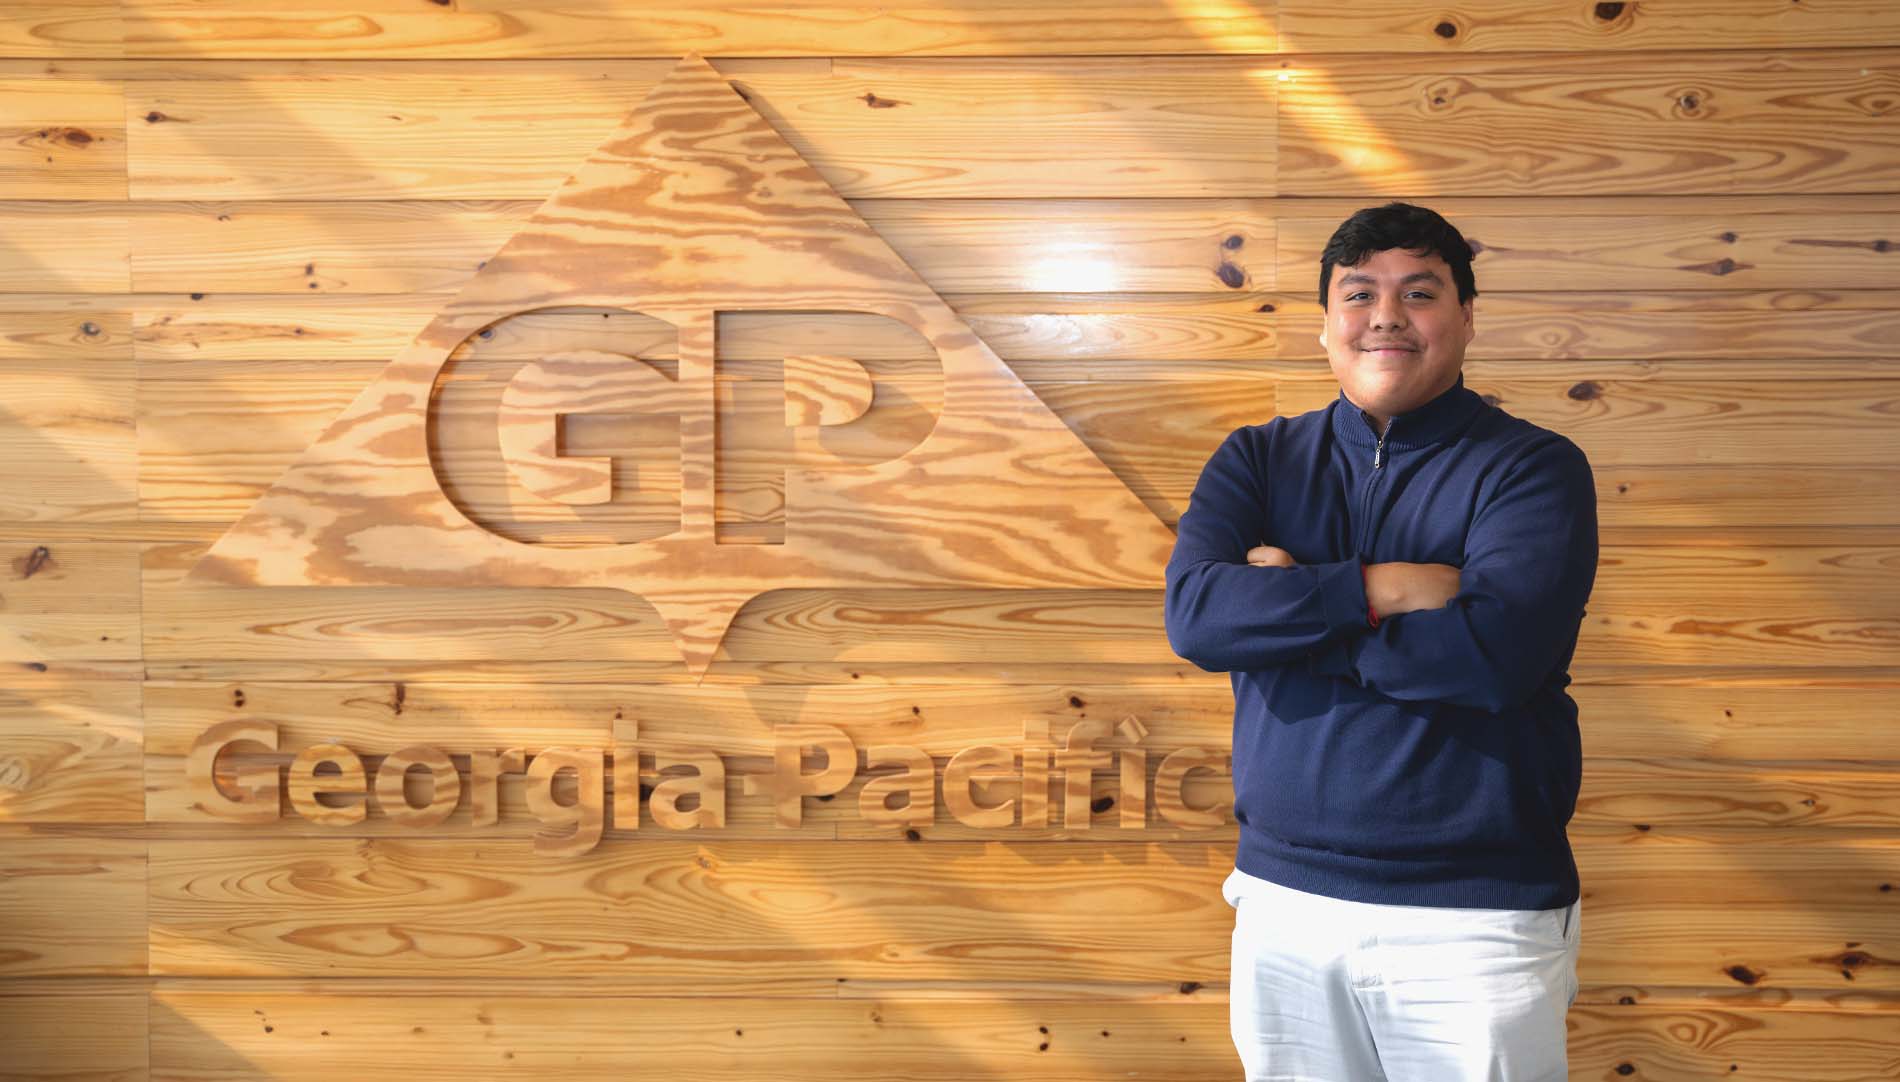 Wesley Romero standing in front of Georgia Pacific logo